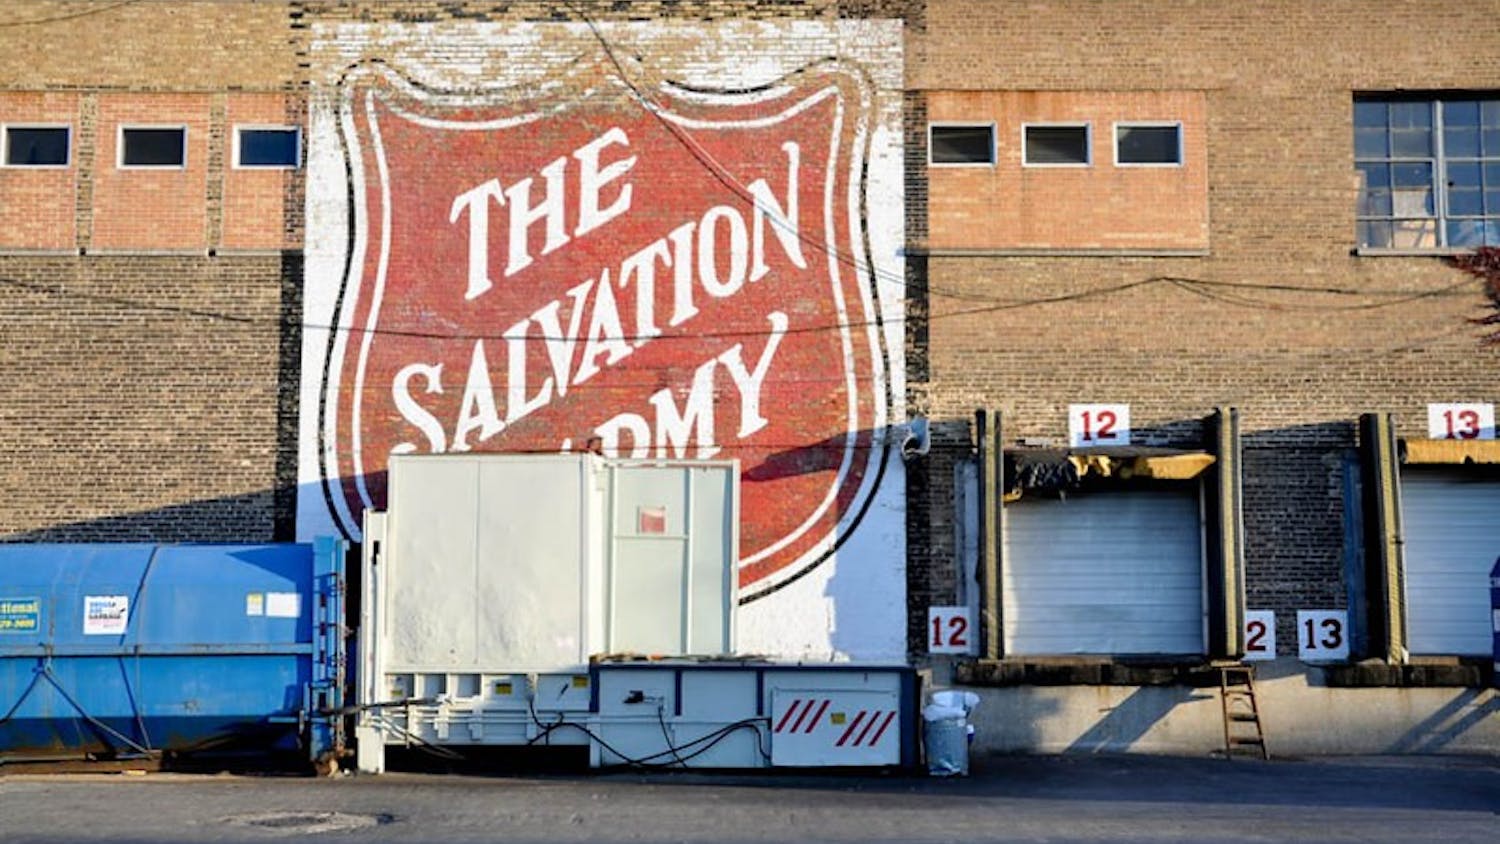 Salvation Army